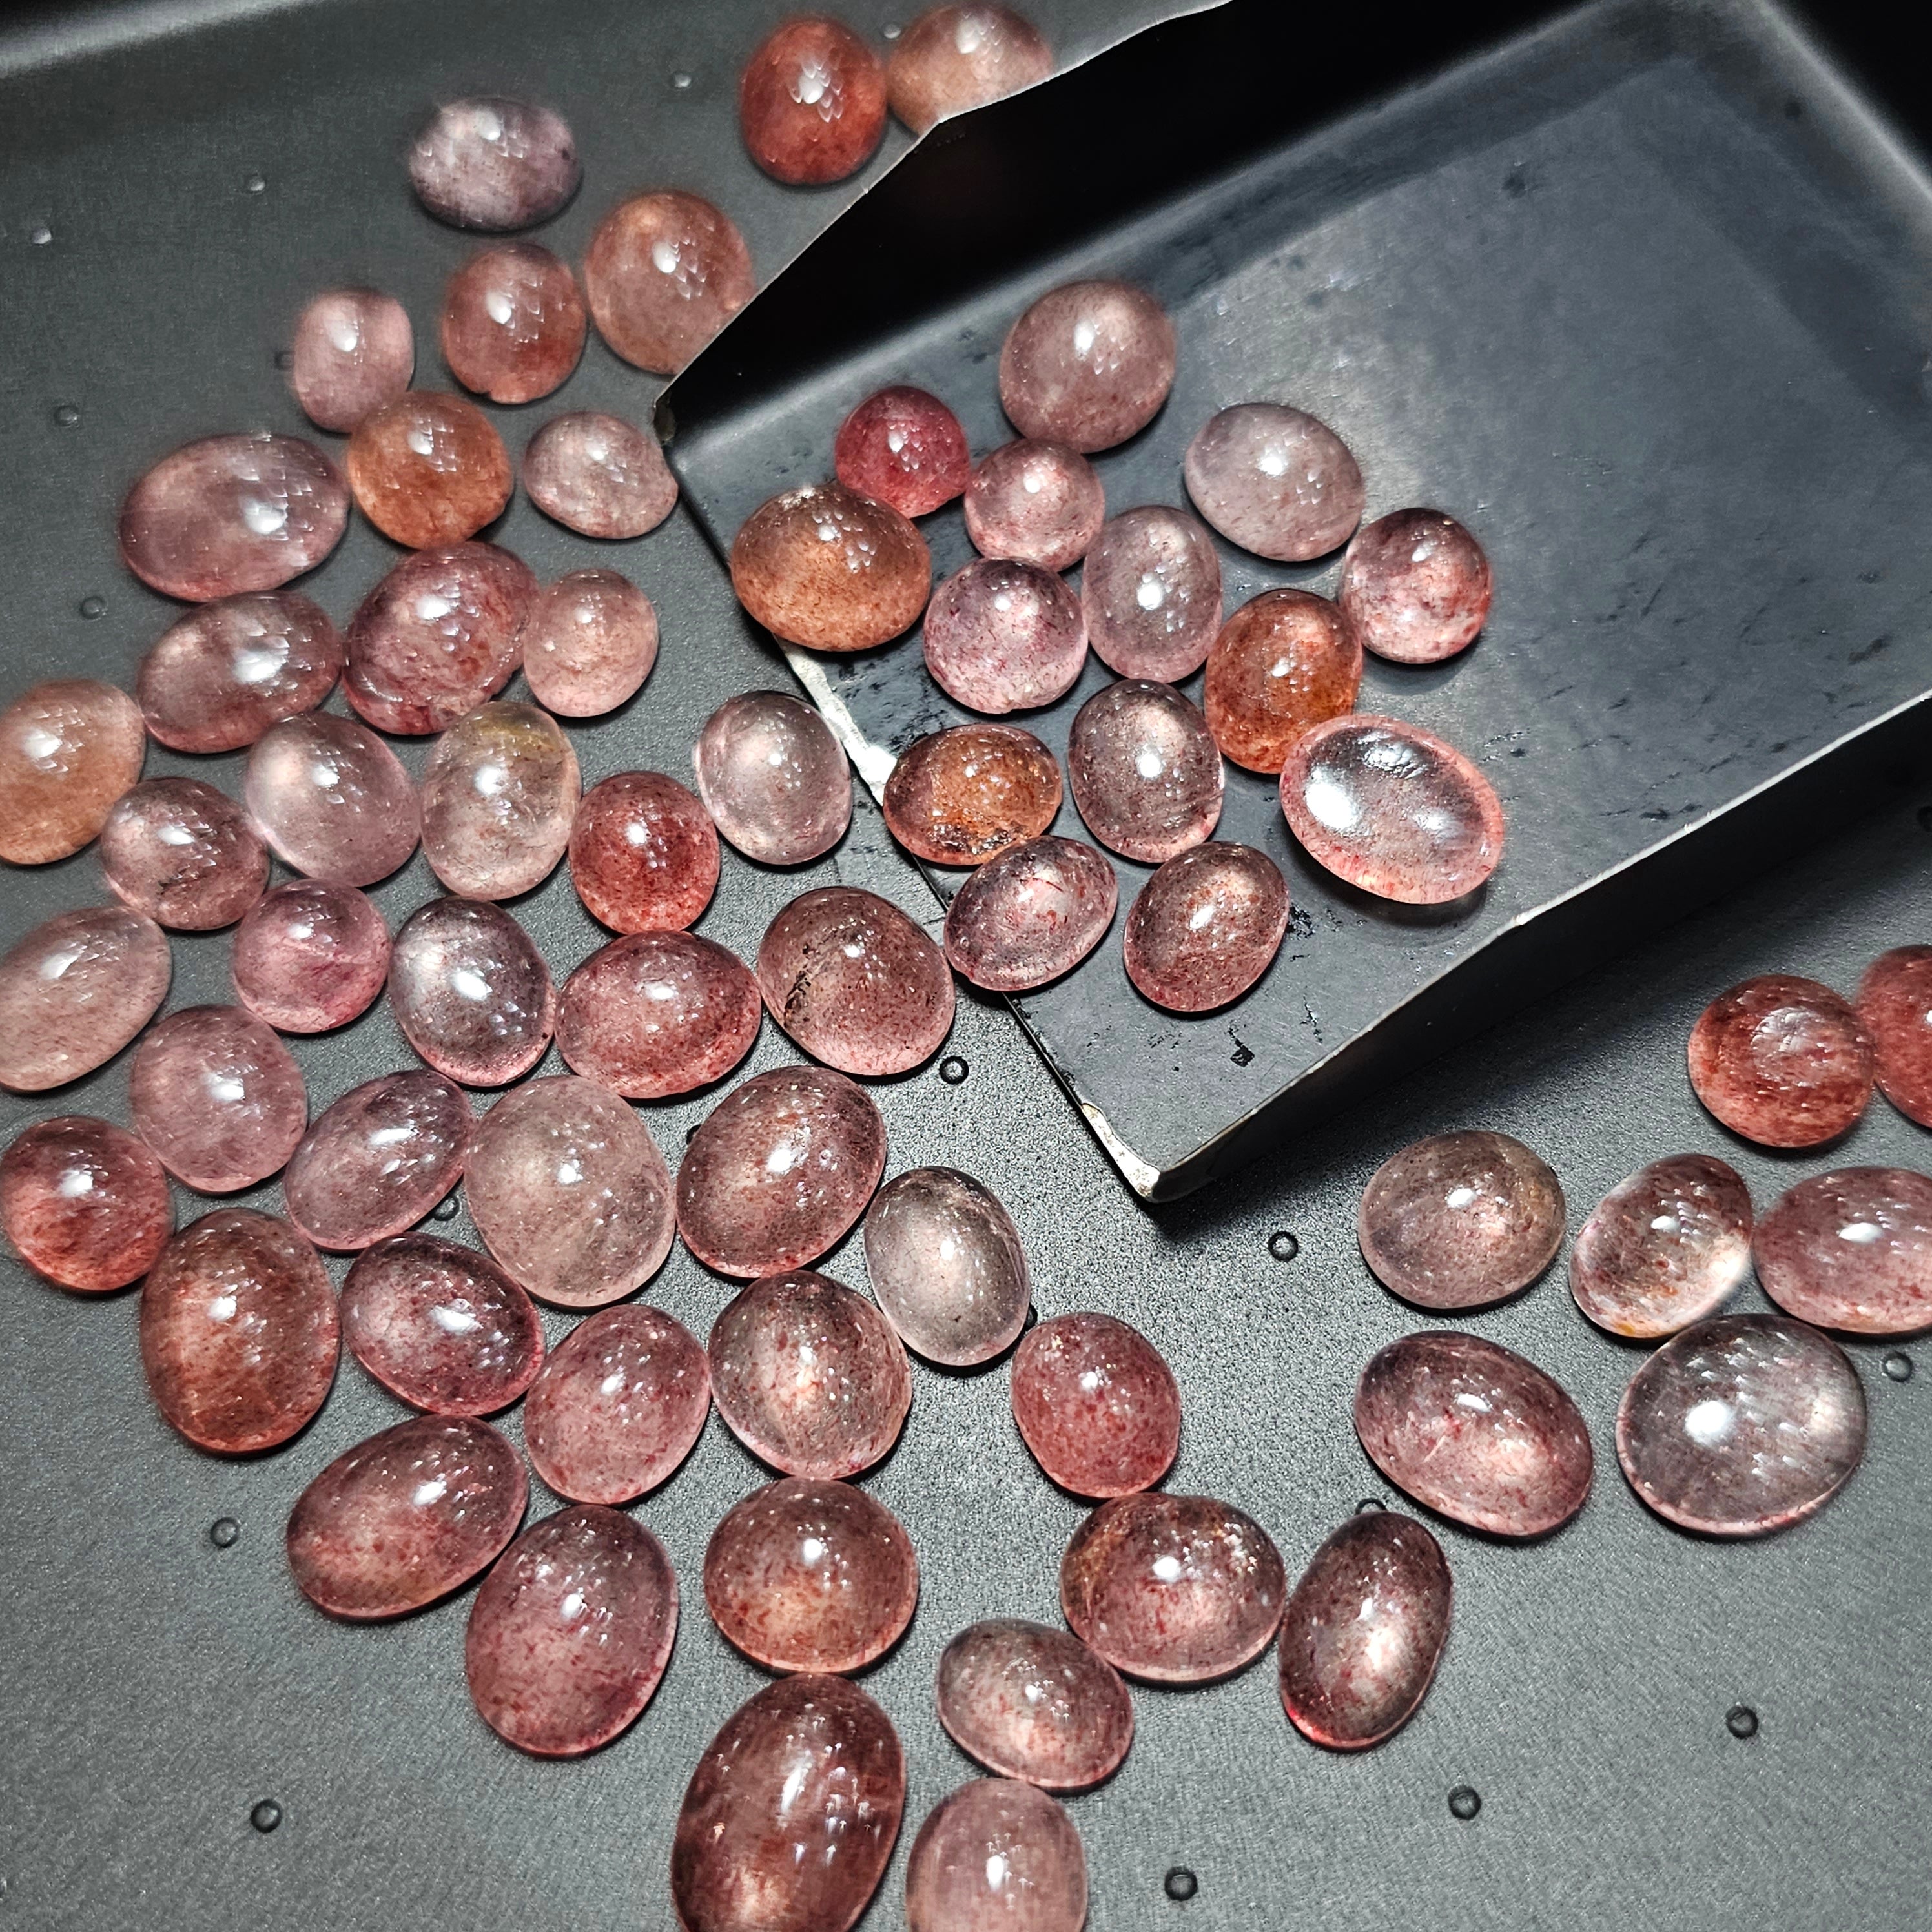 50 Pcs of Lepidocrocite in Quartz | 8-10mm Cabchons - The LabradoriteKing